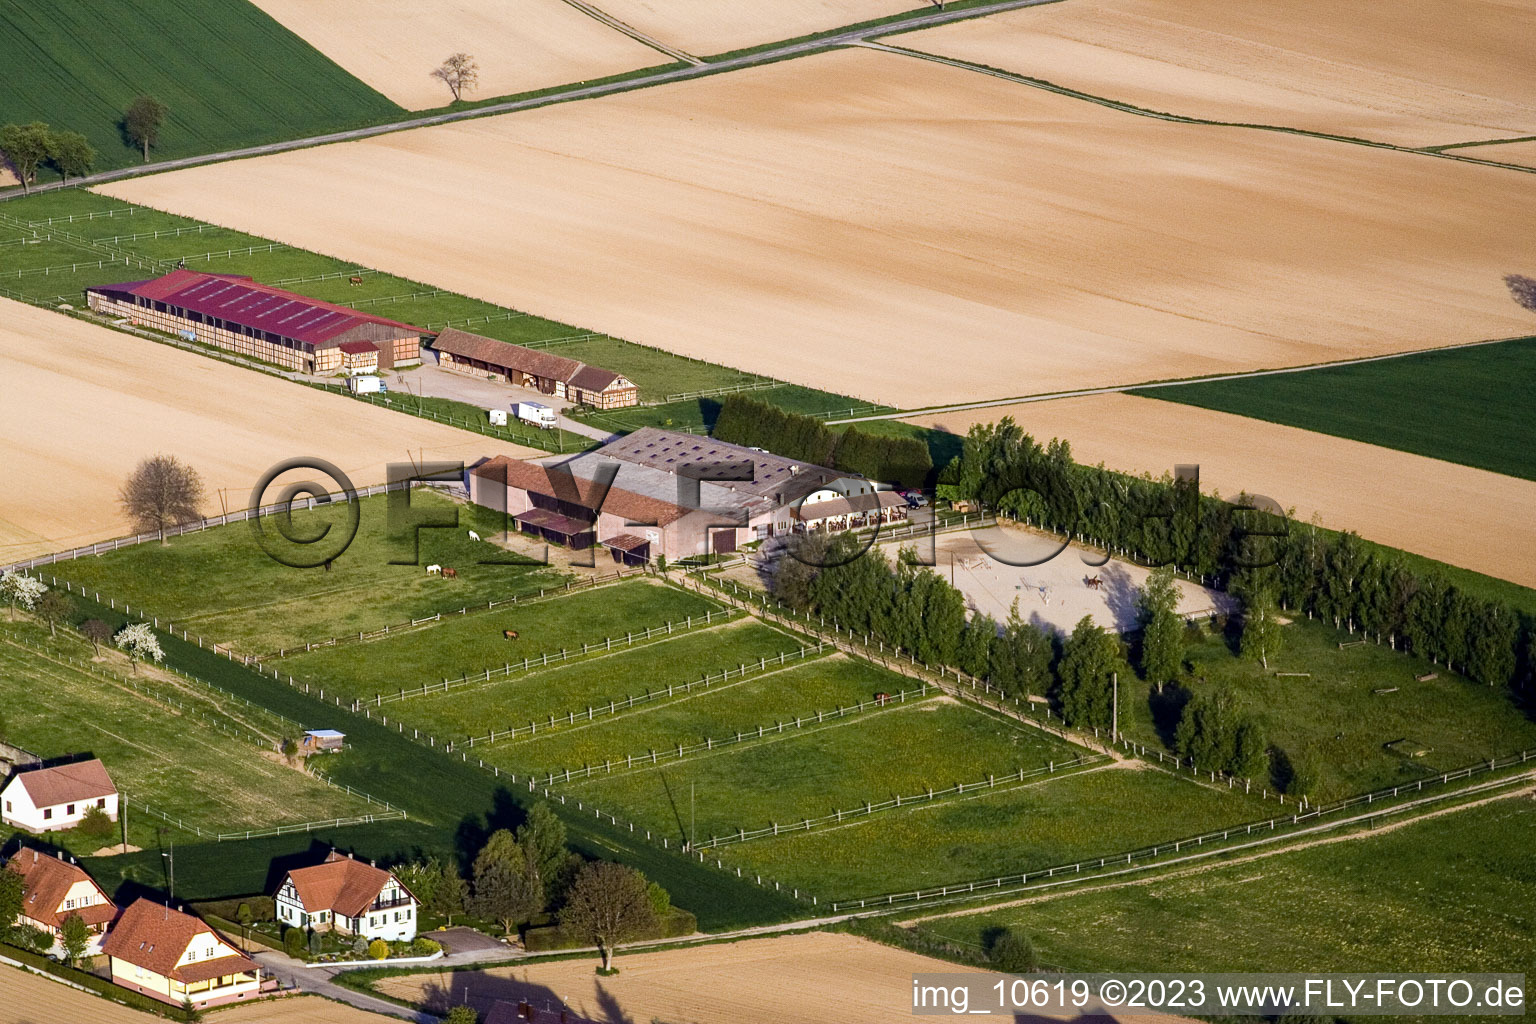 Luftbild von Seebach, Ranch im Bundesland Bas-Rhin, Frankreich